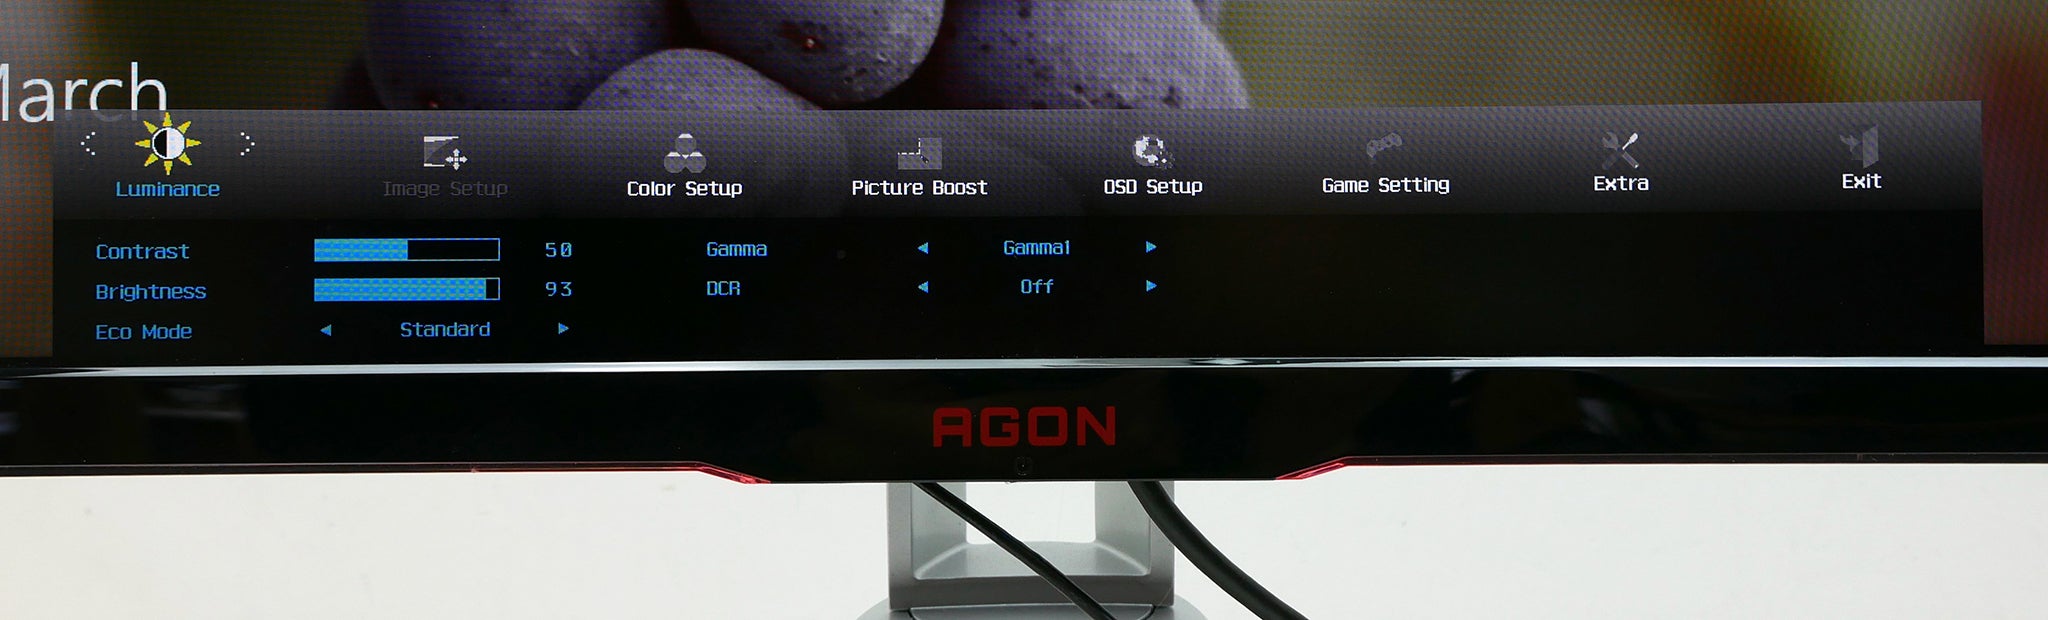 AOC AGON gaming monitor displaying on-screen menu options.